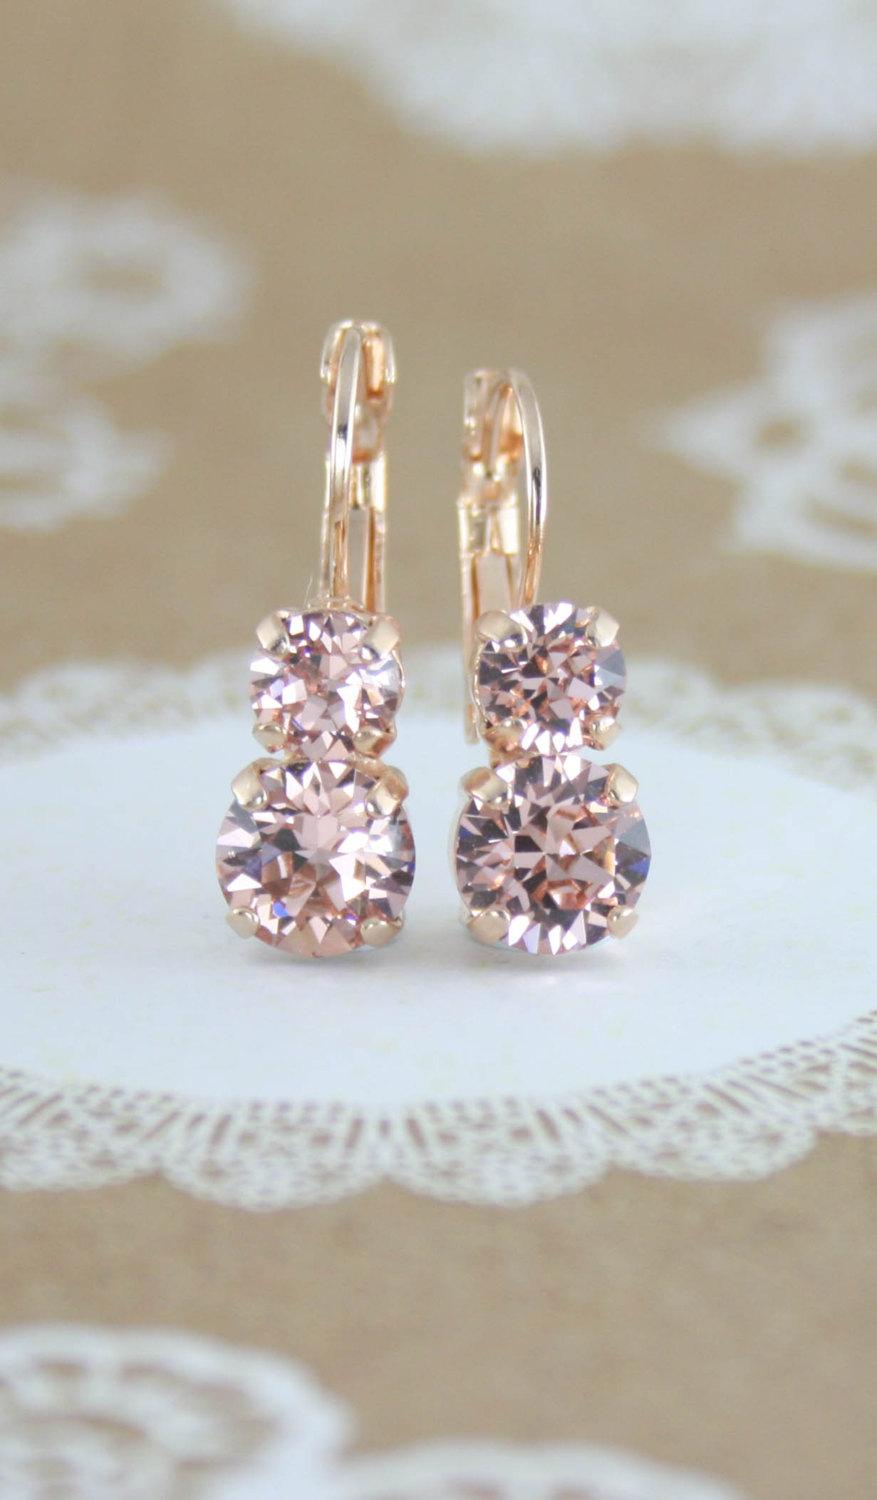 Wedding - Blush earrings,blush crystal earrings,blush bridesmaid earrings,swarovski blush,rose gold earrings,rose gold blush earrings,blush wedding